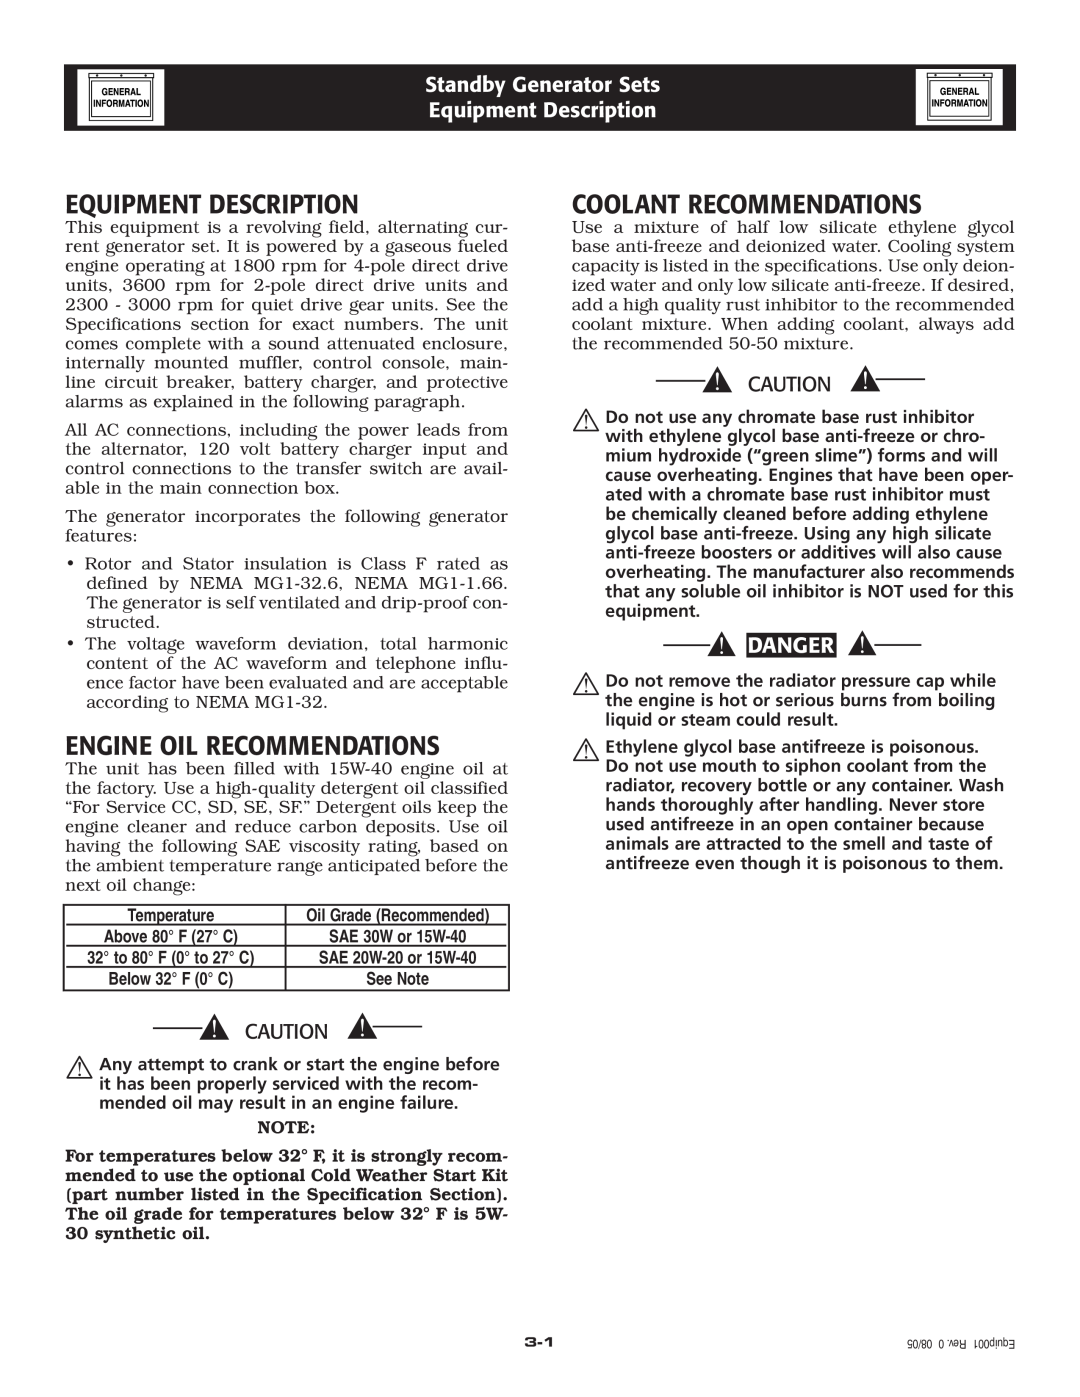 Generac 20kW owner manual Equipment Description, Engine Oil Recommendations, Coolant Recommendations, Danger 